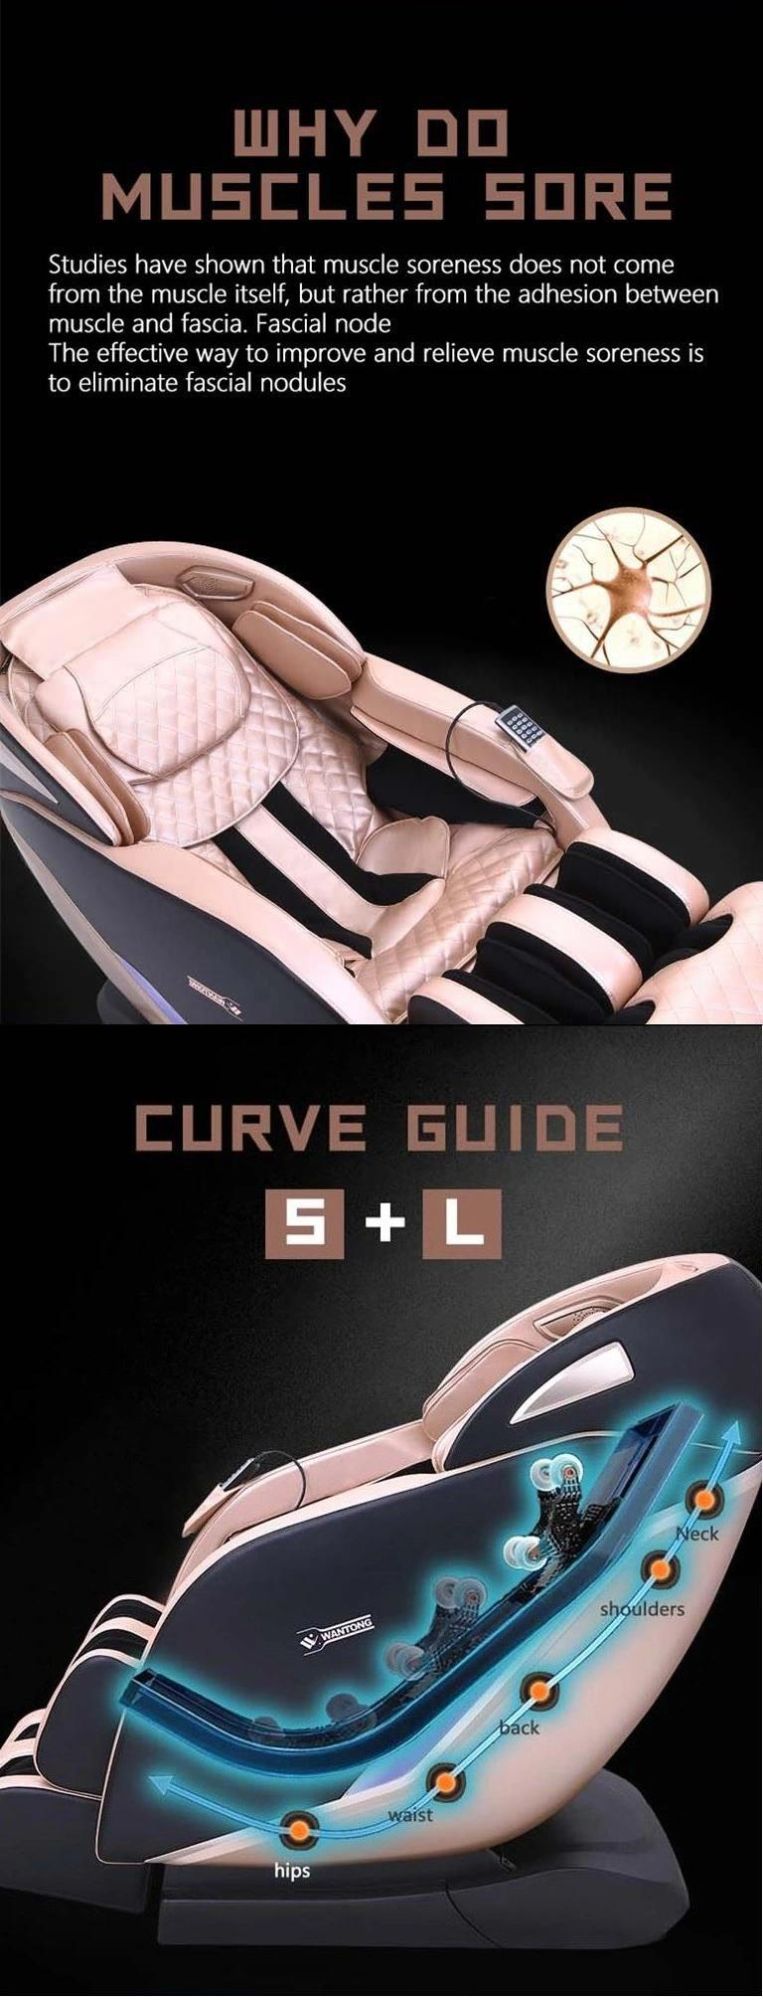 Home Luxury New Best Fashion 3D Zero Gravity Double SL-Shaped Full Body Massage Chair